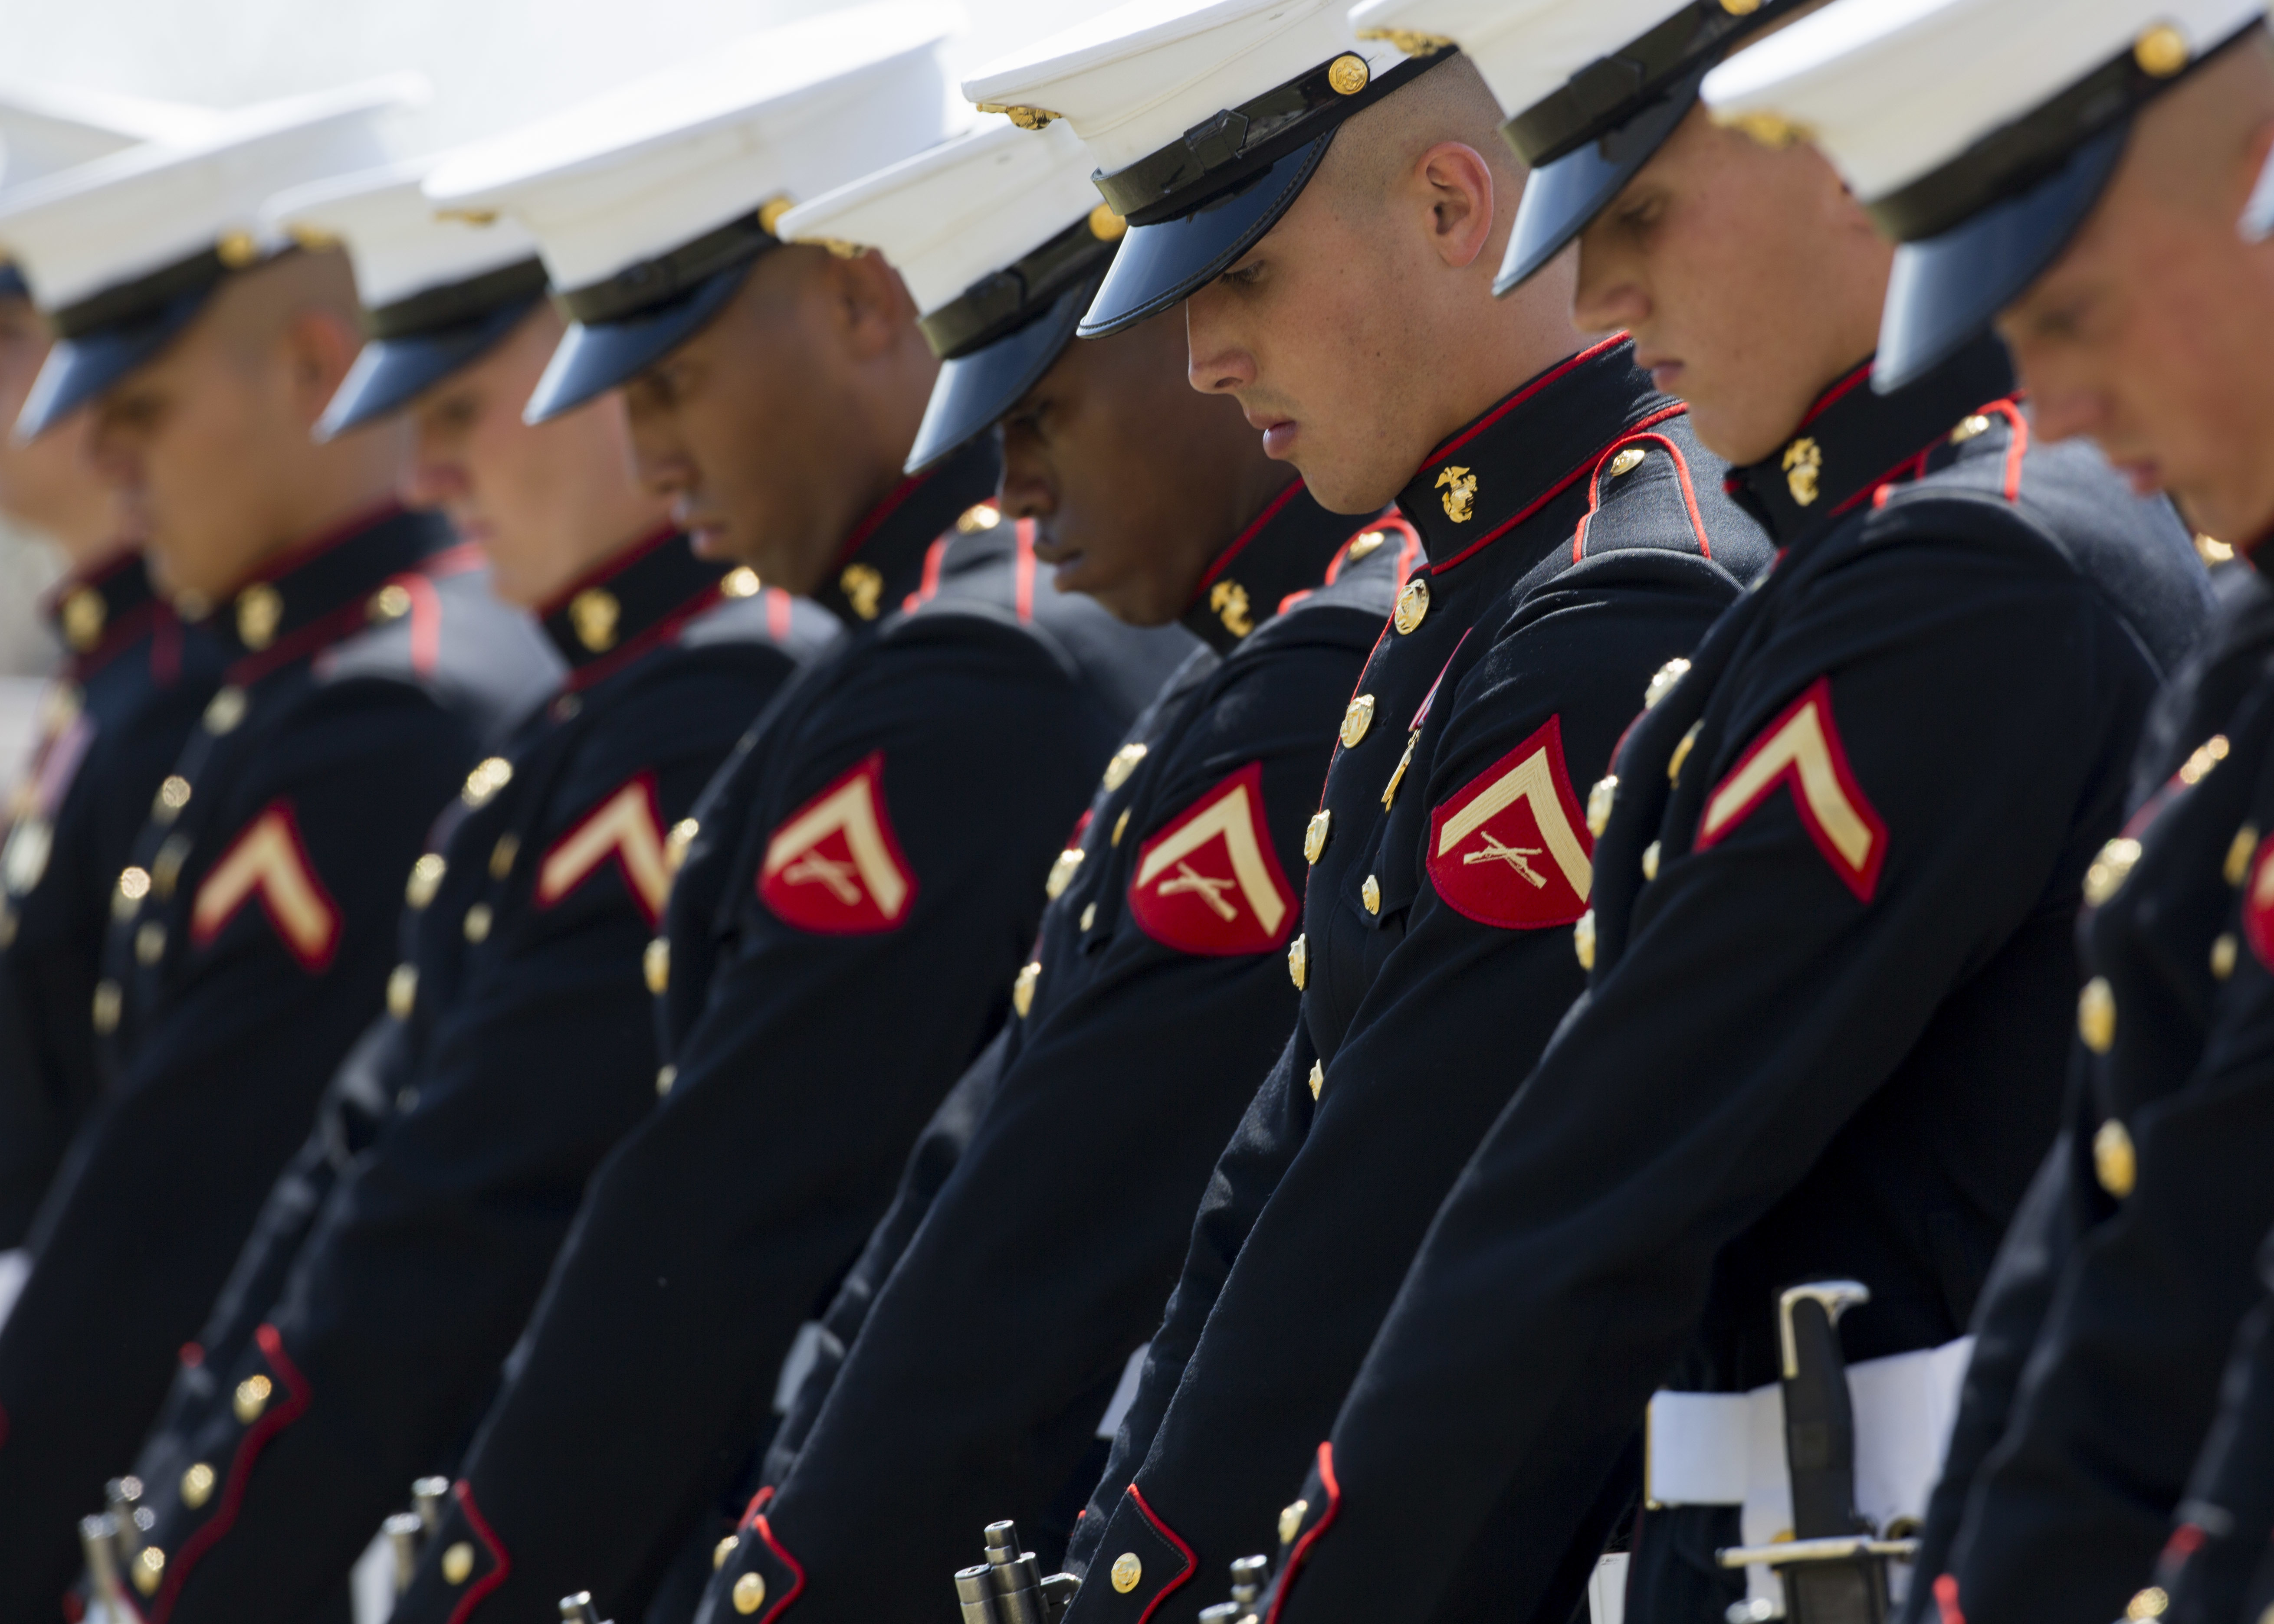 Marines in Dress Blues uniform